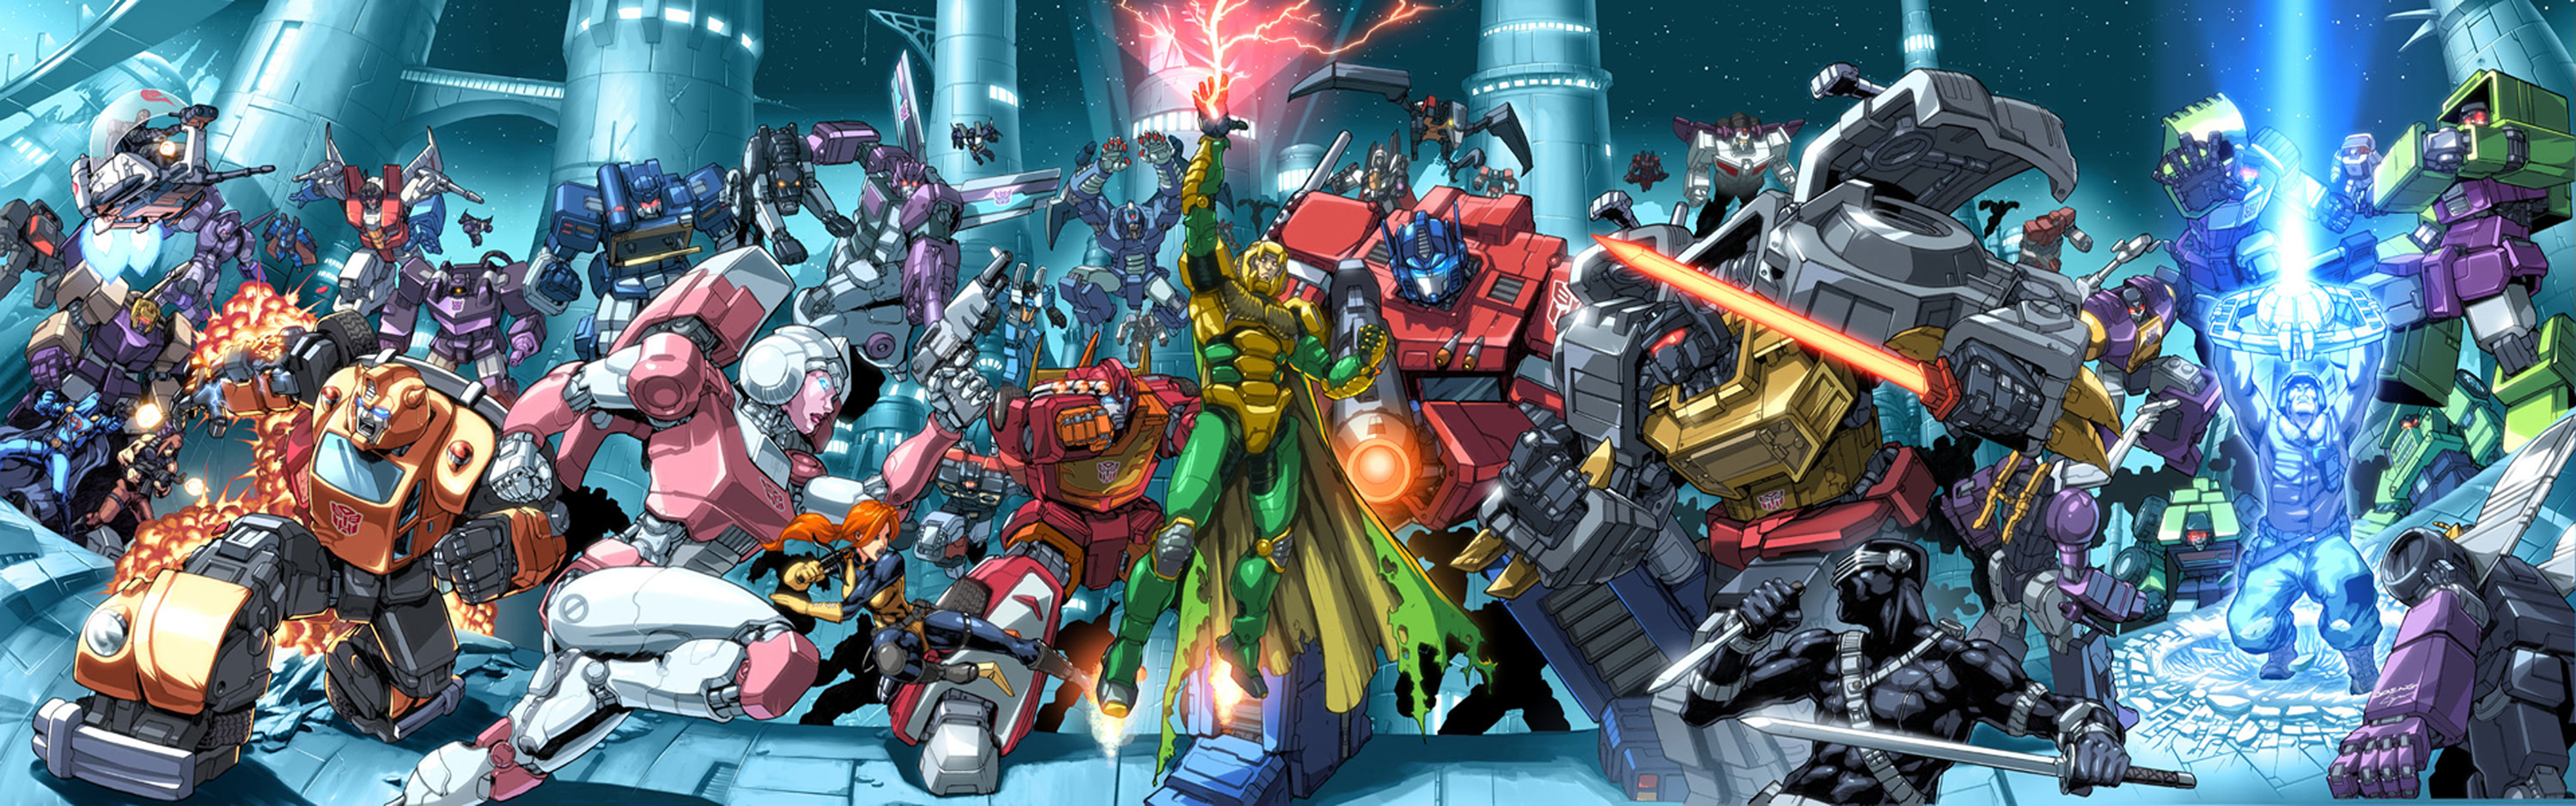 Dual Screen Gi Joe Vs Transformers Ics Superhero Weapons Wallpaper